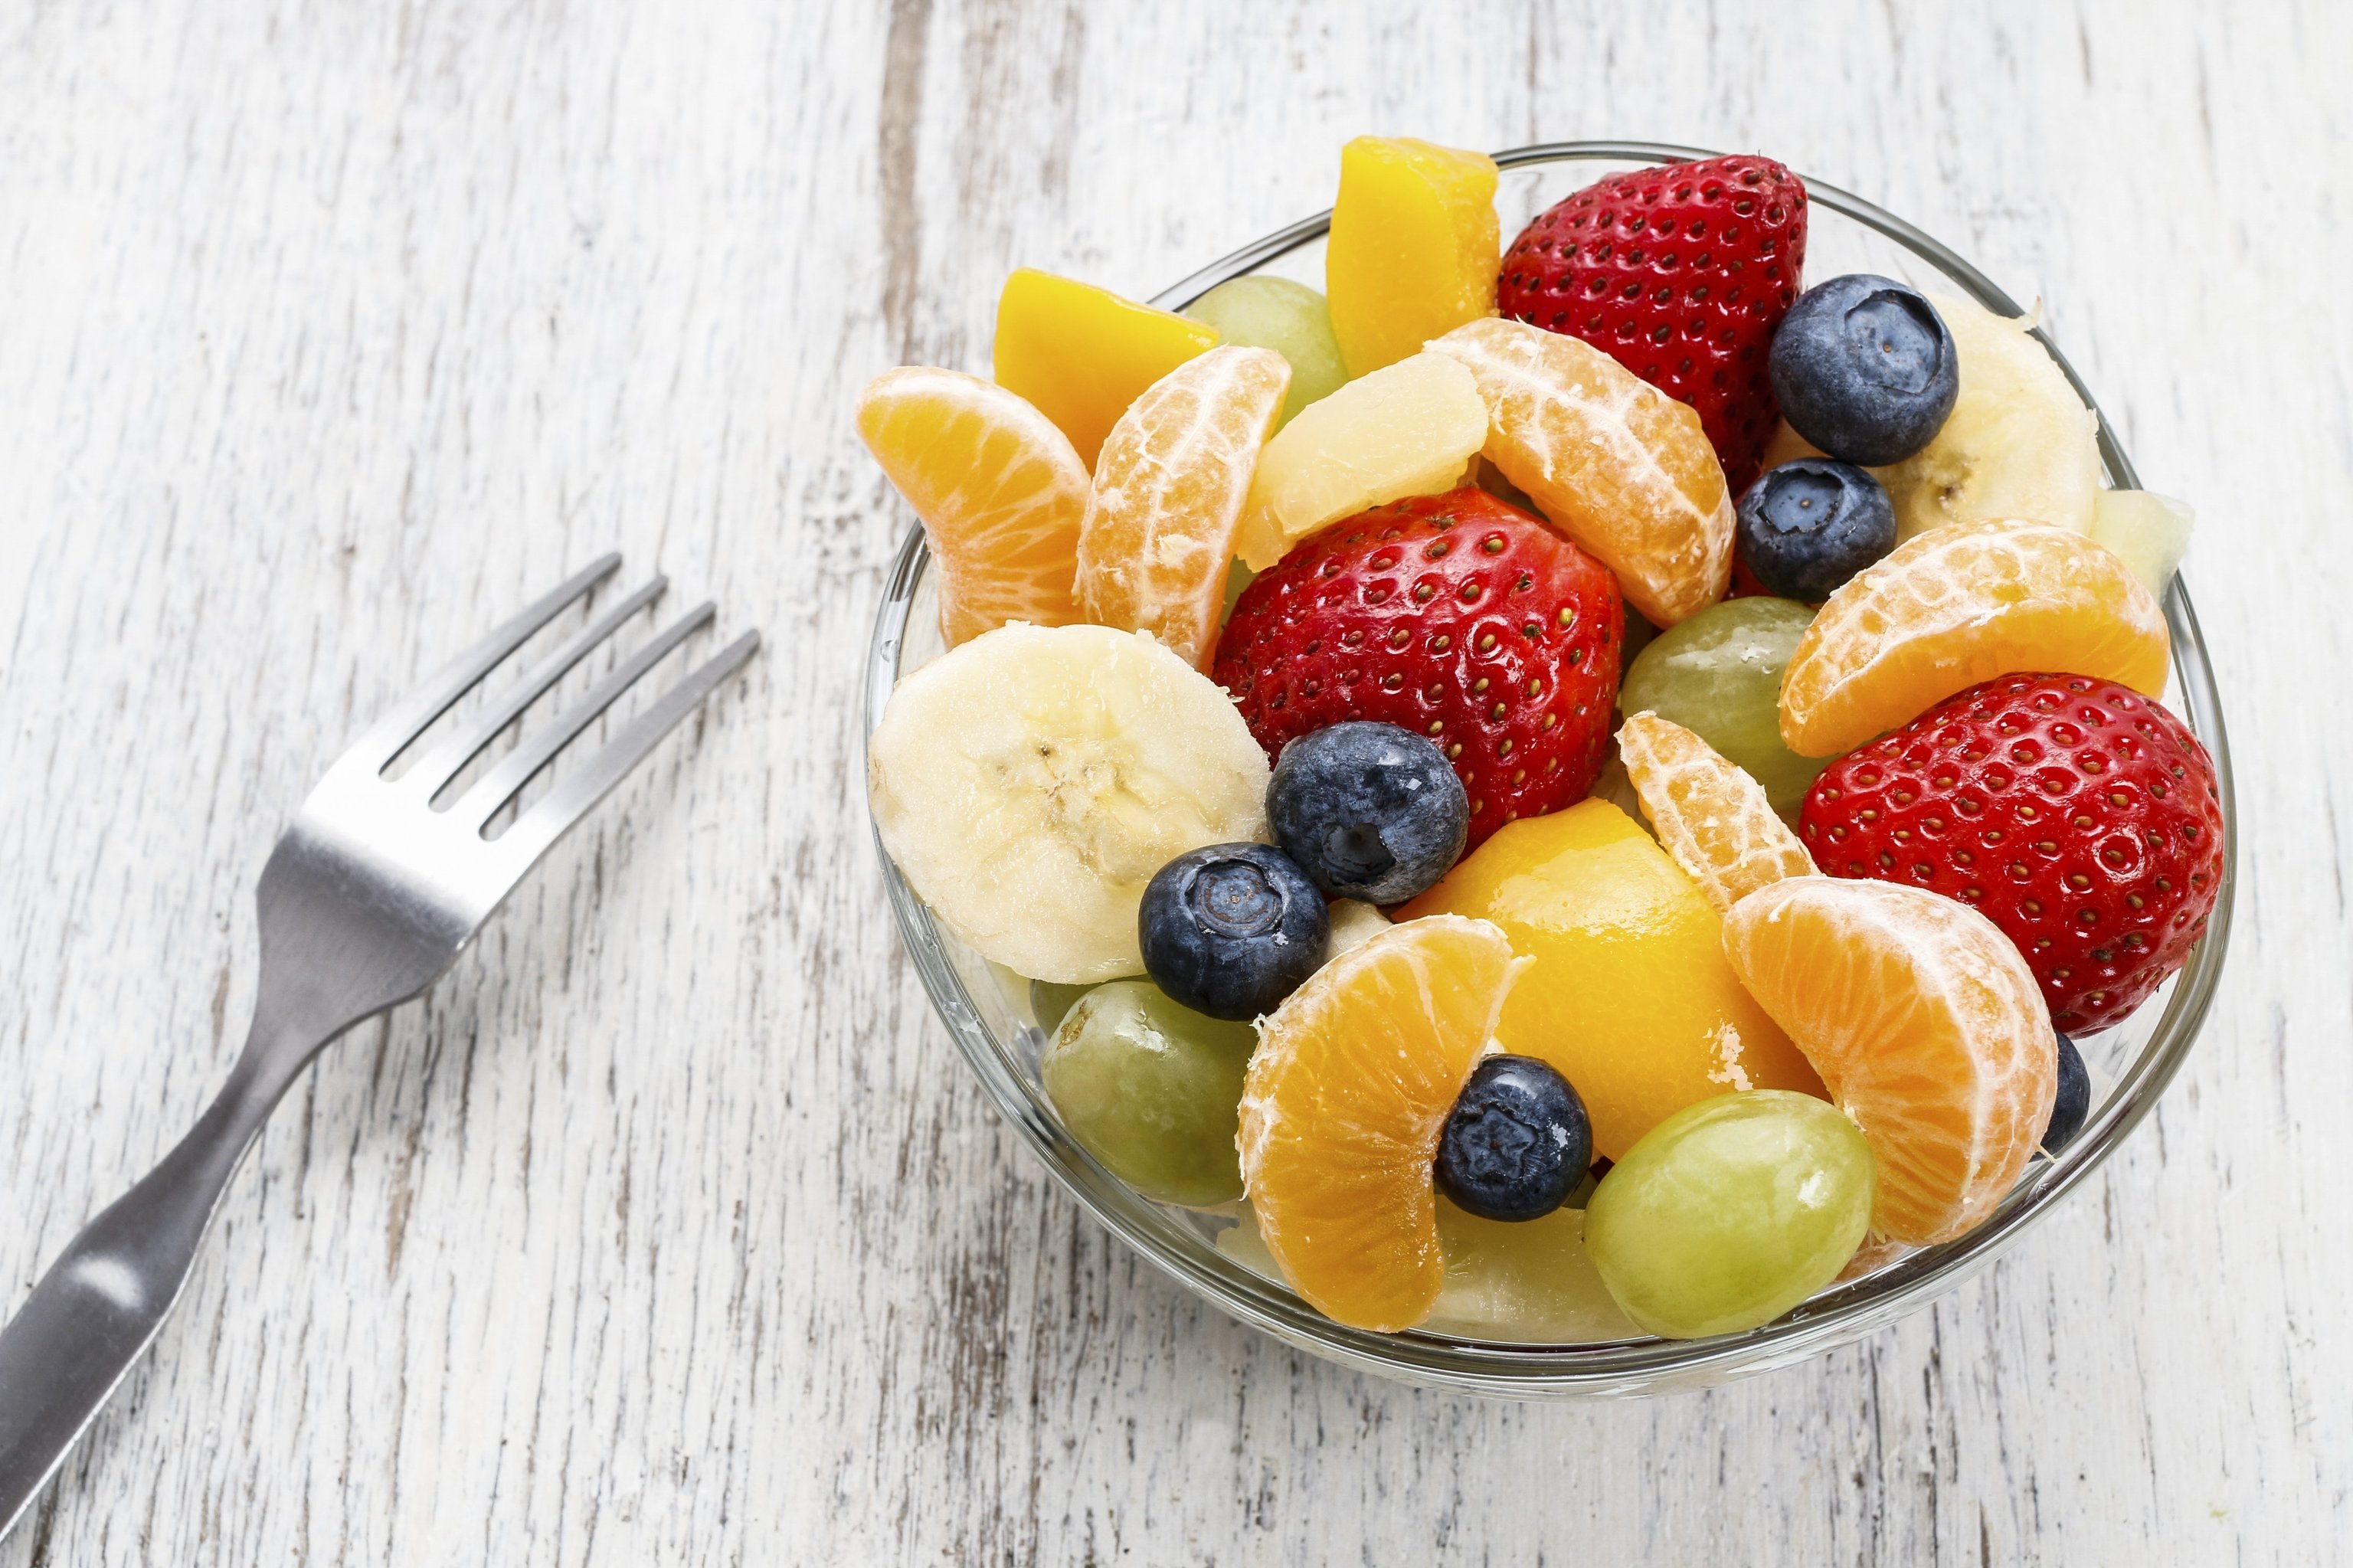 ALT: Does eating fruit at night make you fat?